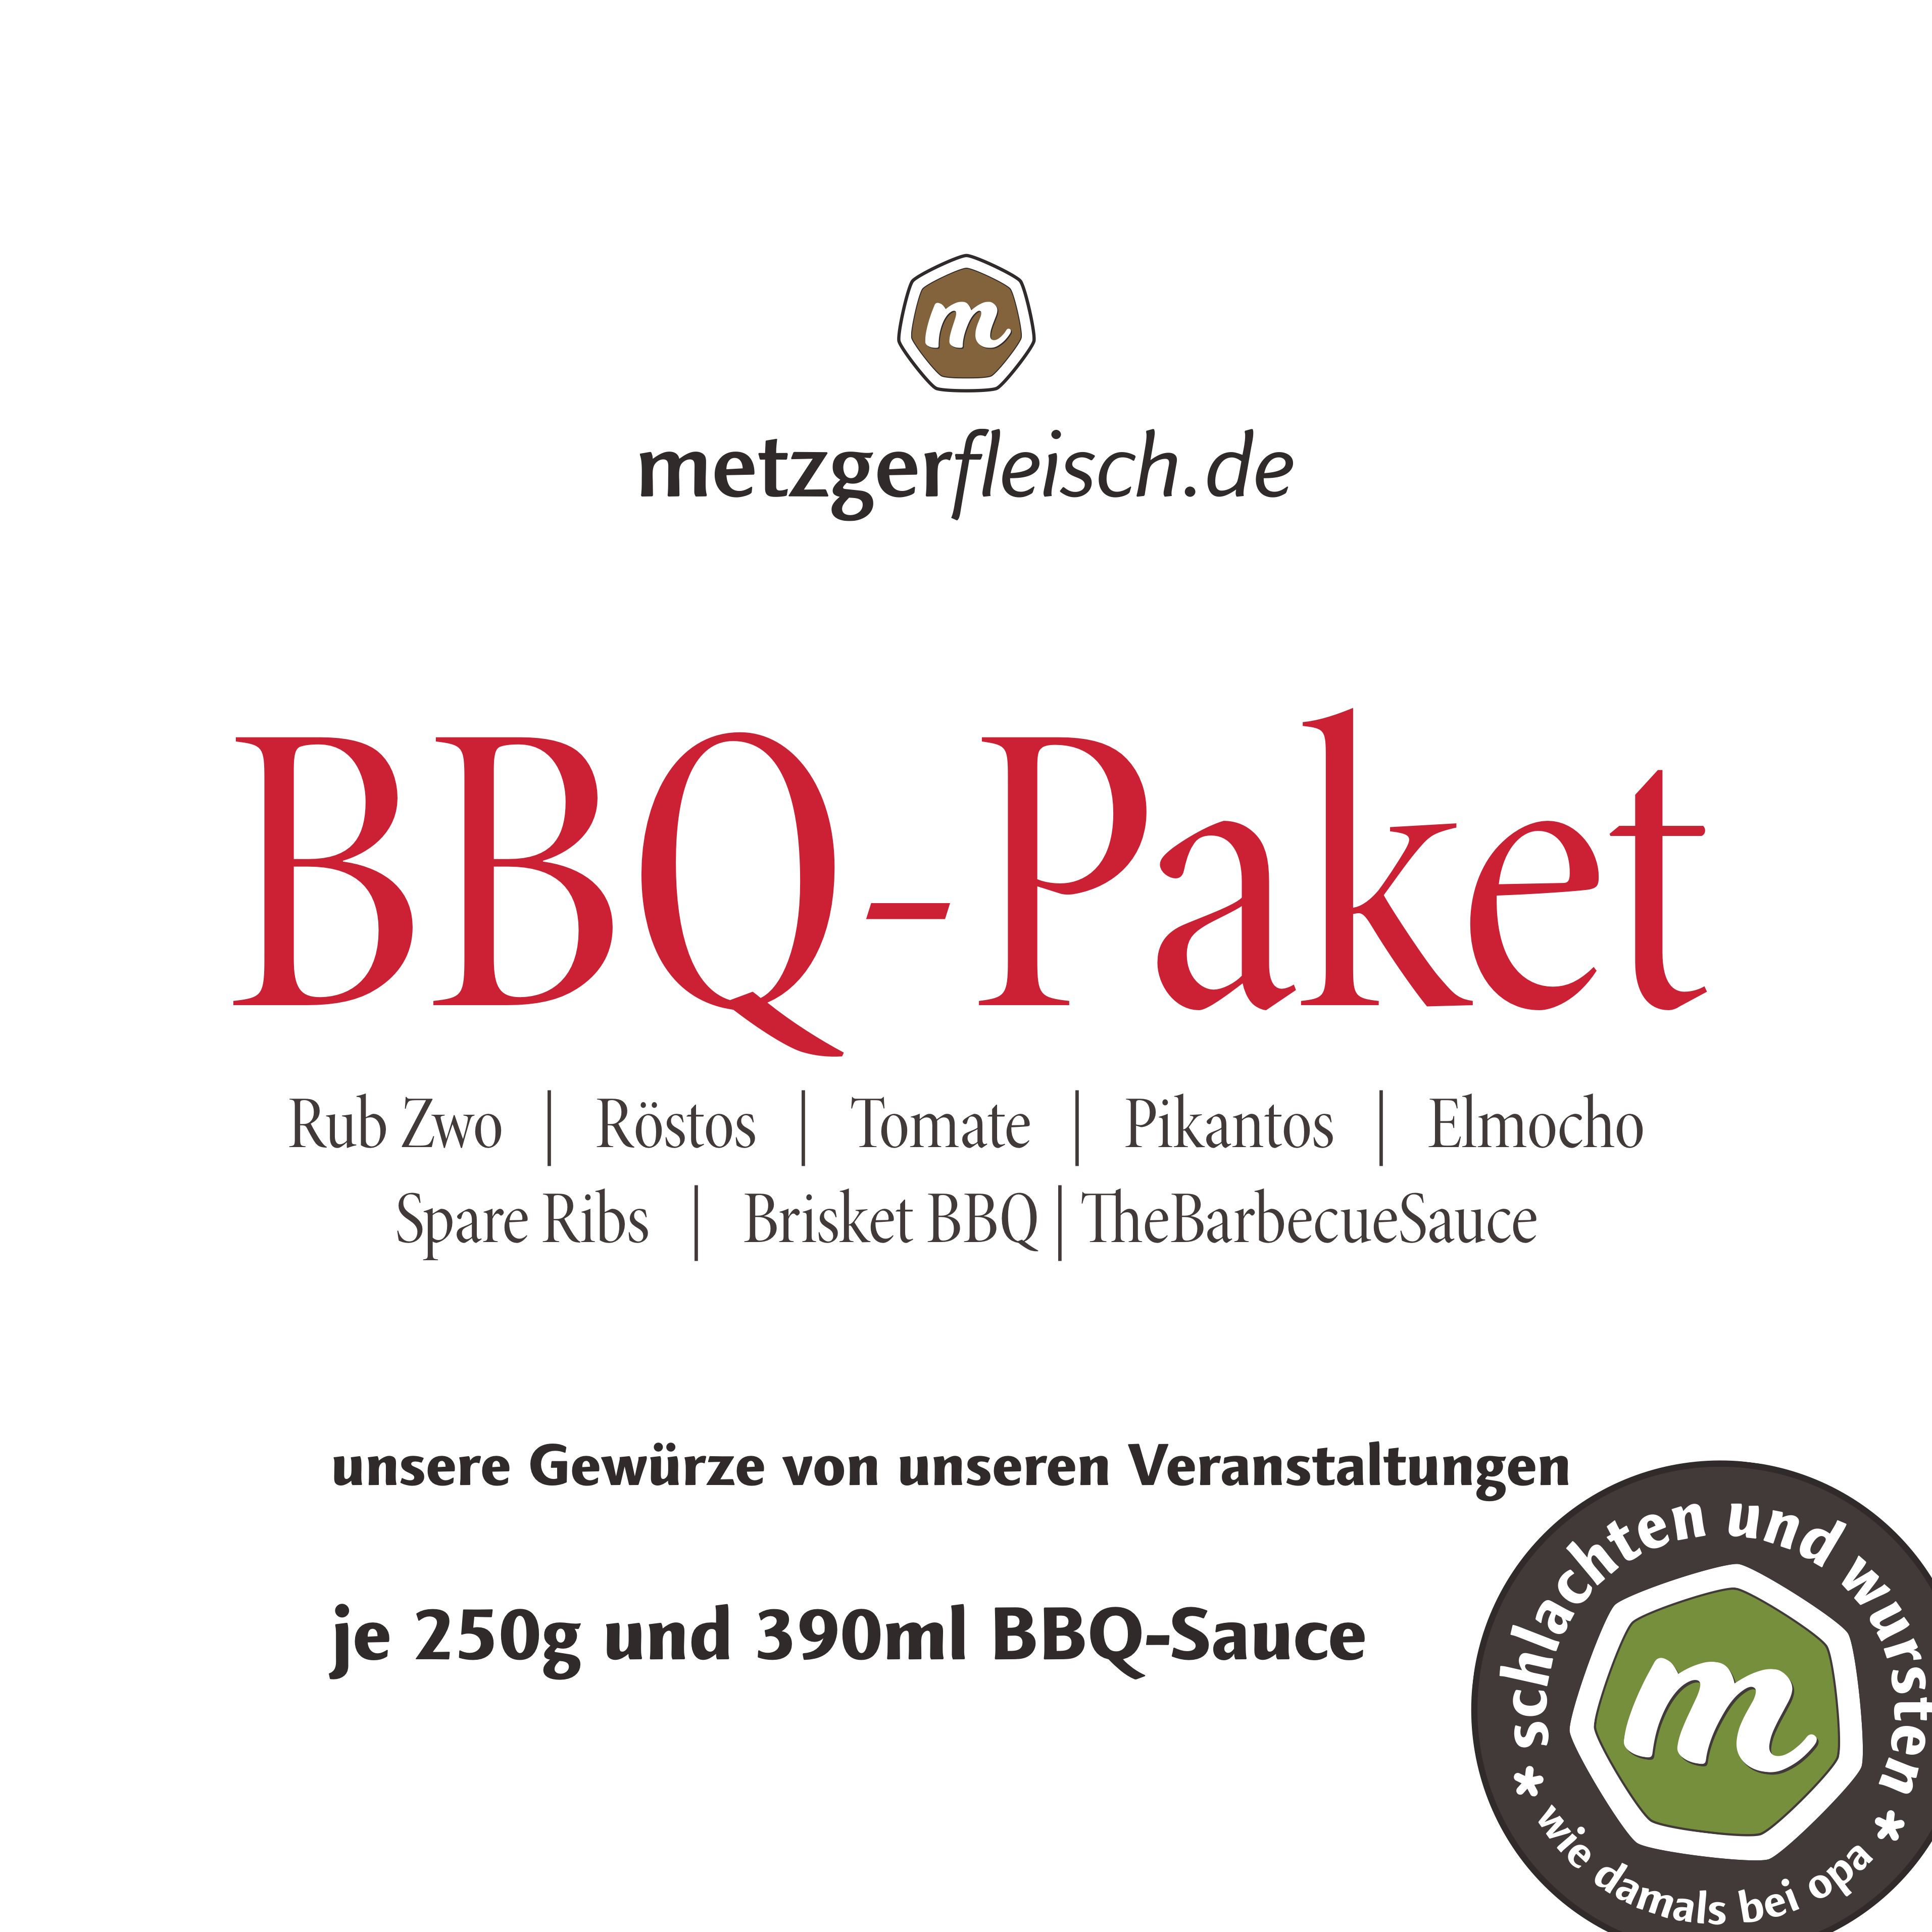 metzgerfleisch.de BBQ-Paket | 1.500g Gewürze + 390ml BBQ-Sauce